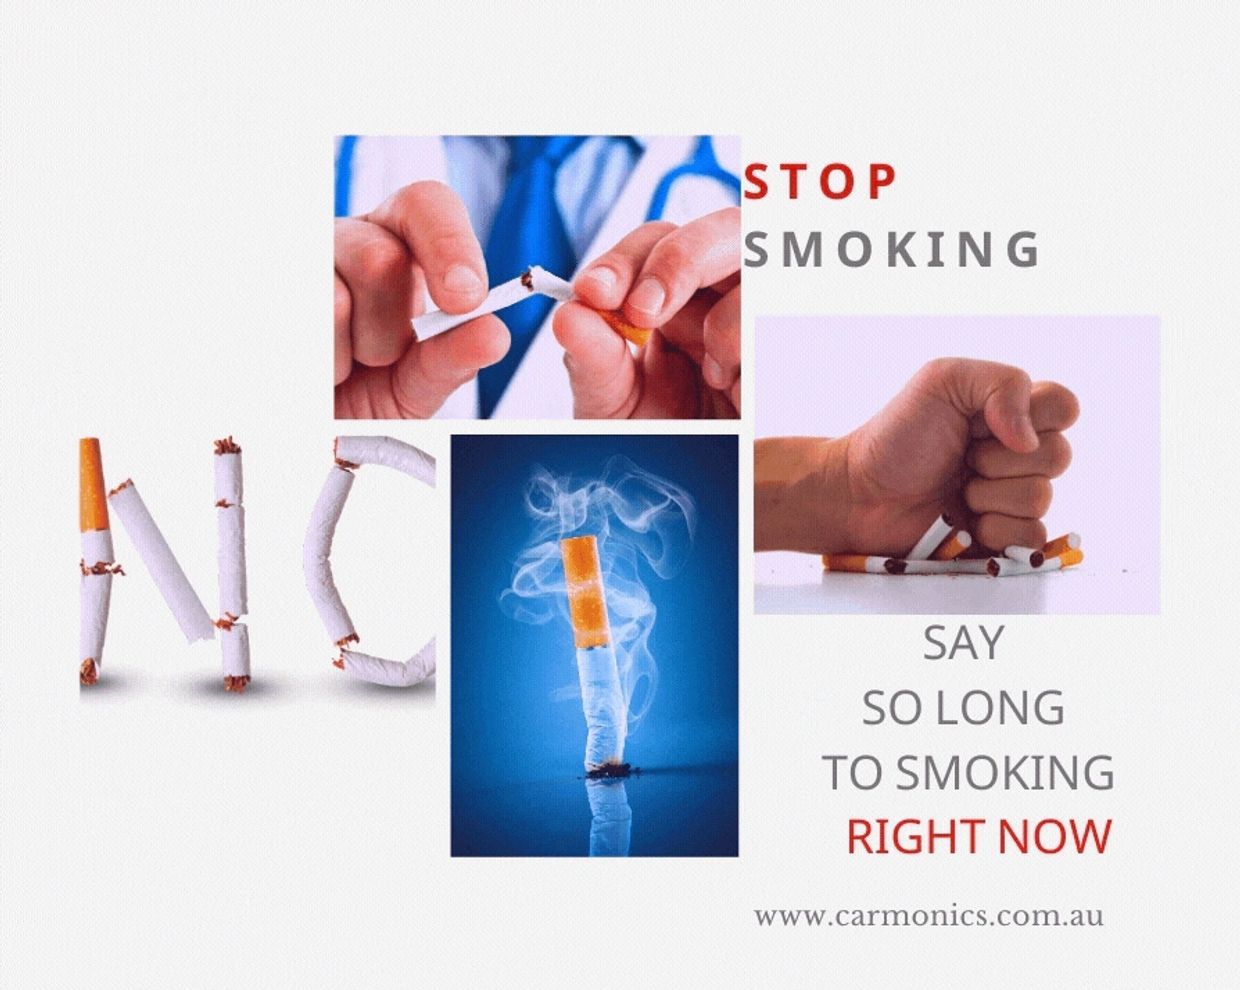 Stop Smoking program at carmonics.com.au